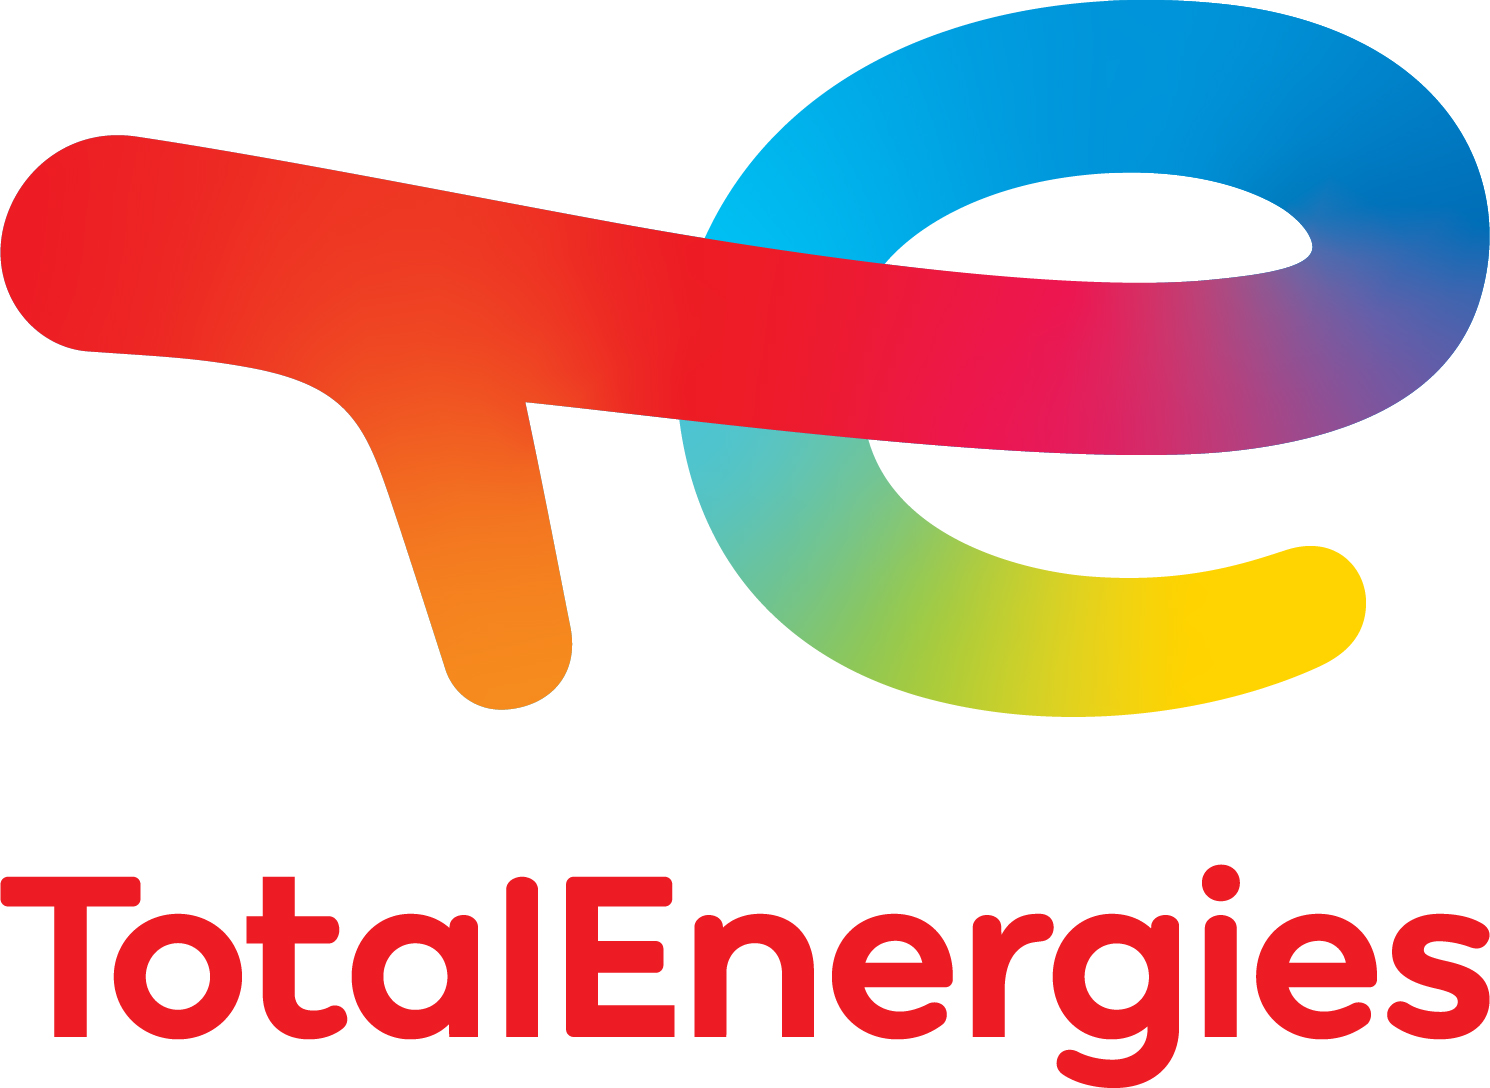 orter_logos/totalenergies company logo